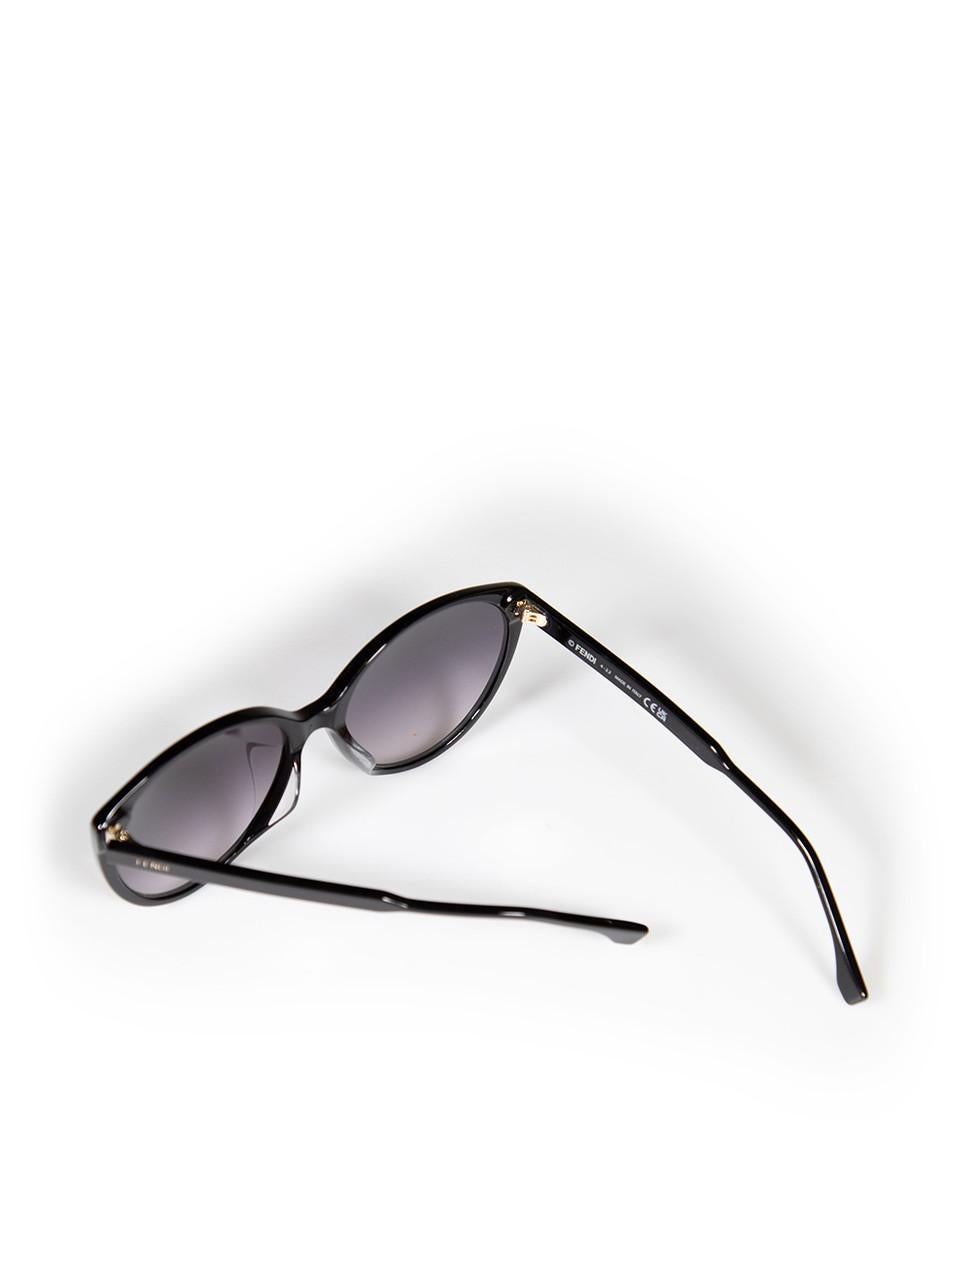 Fendi Black Gradient Smoke Cat Eye Sunglasses For Sale 3